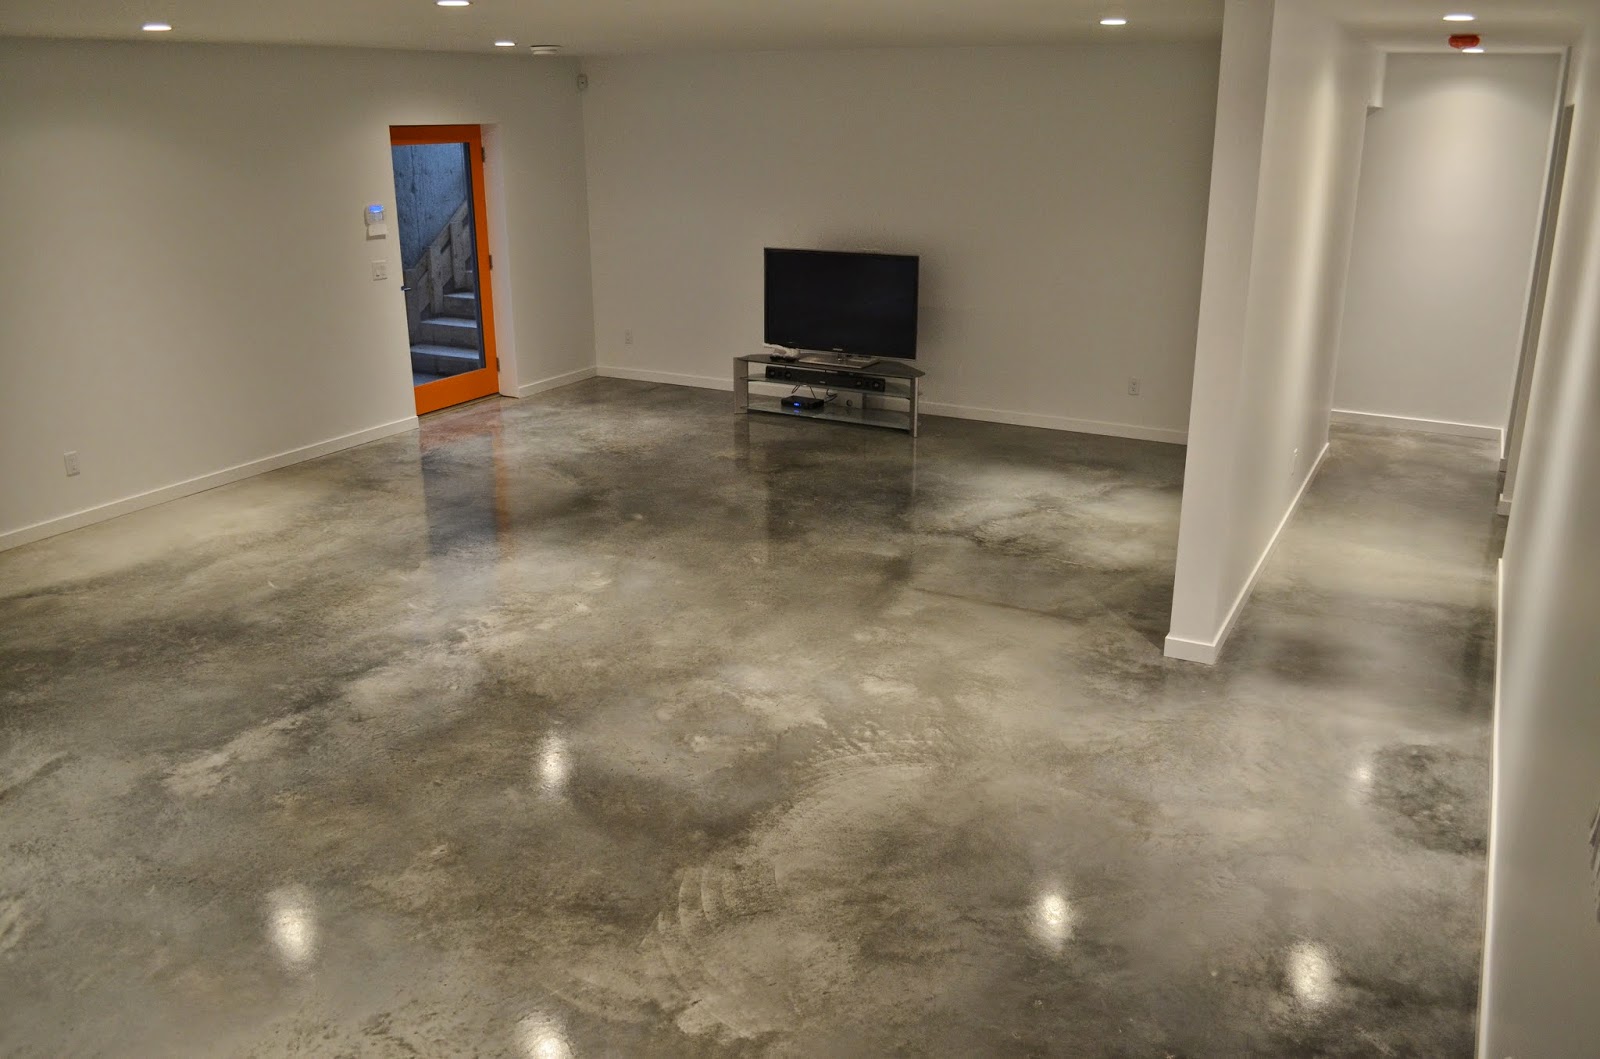 Concrete finished floors